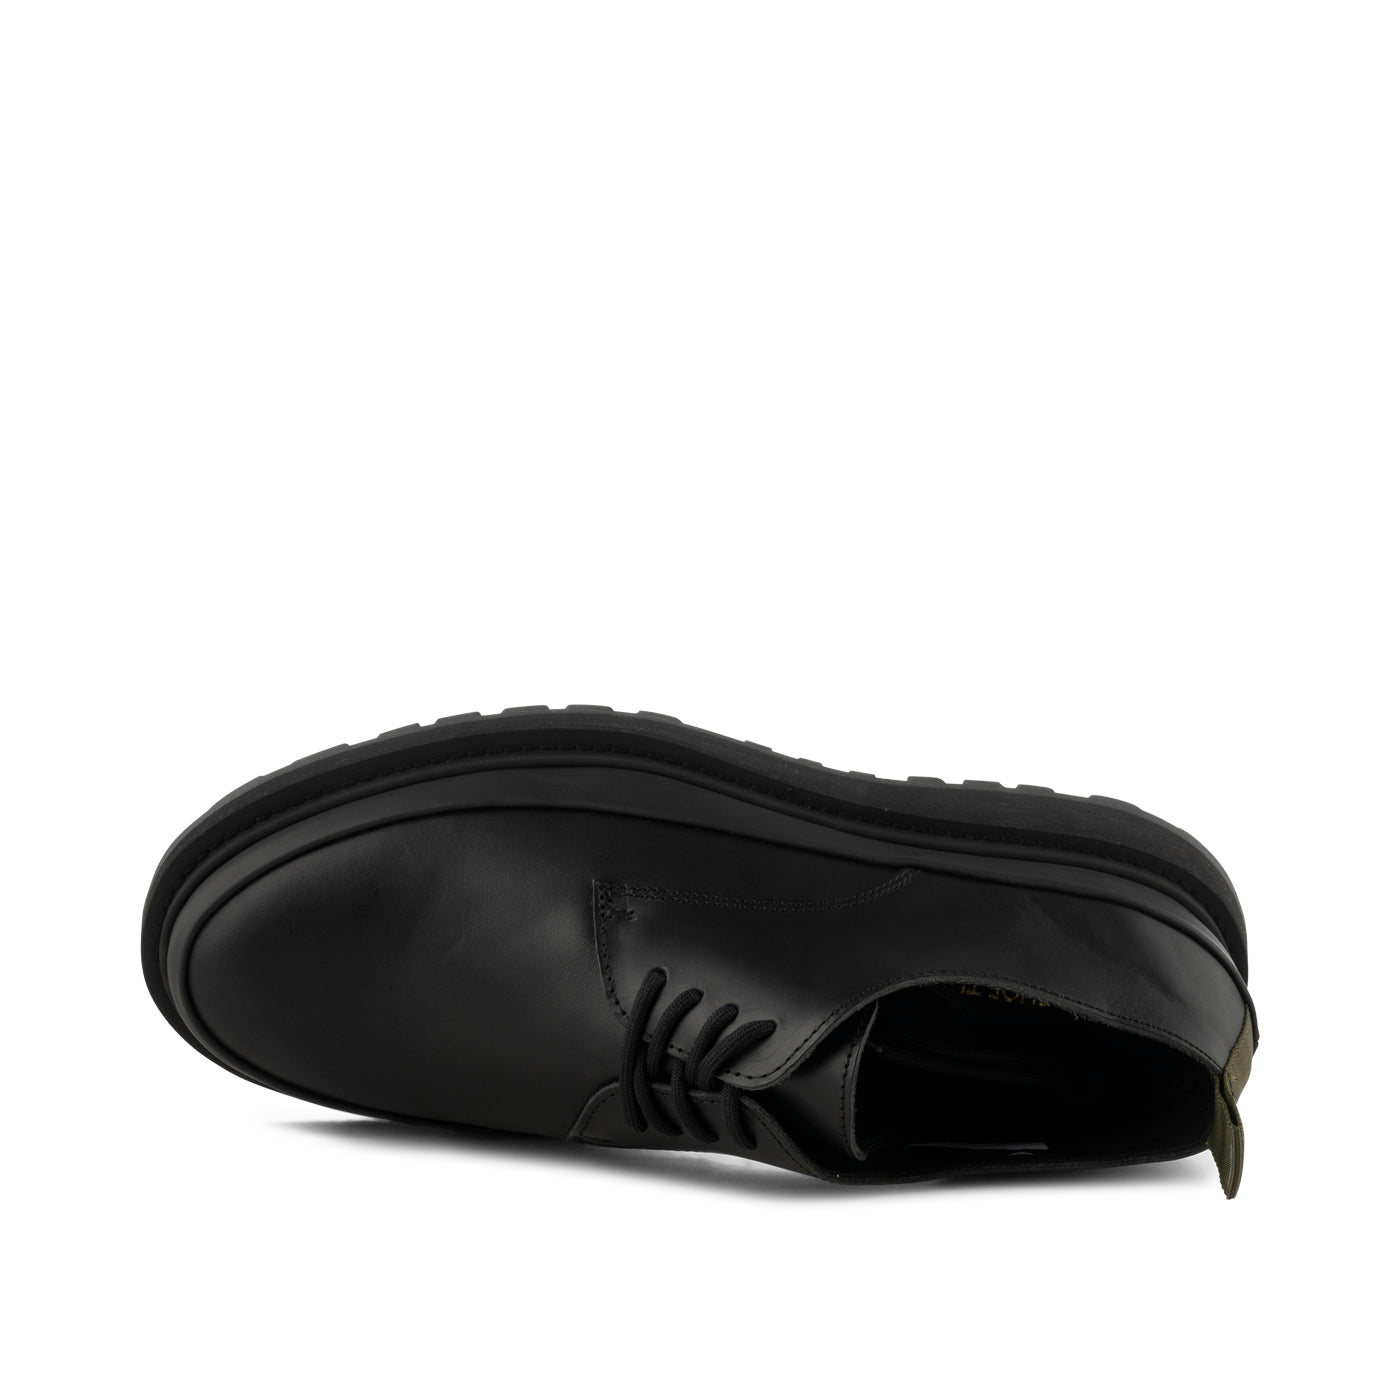 SHOE THE BEAR MENS Kite hybrid derby leather Shoes 110 BLACK